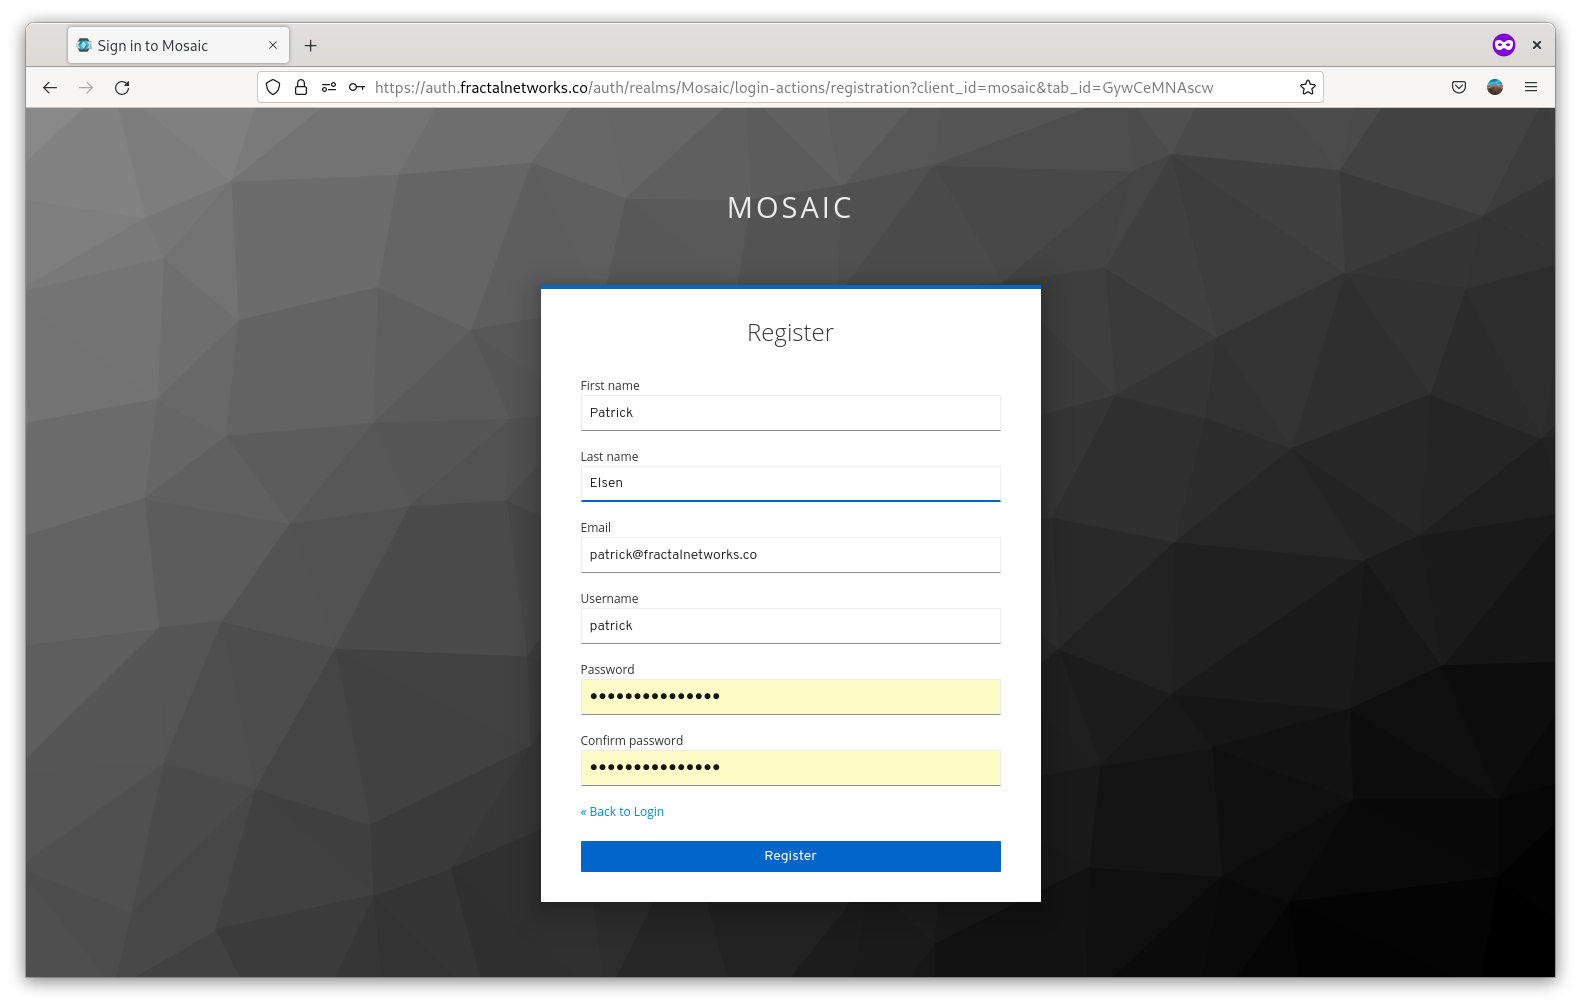 Mosaic Registration Form